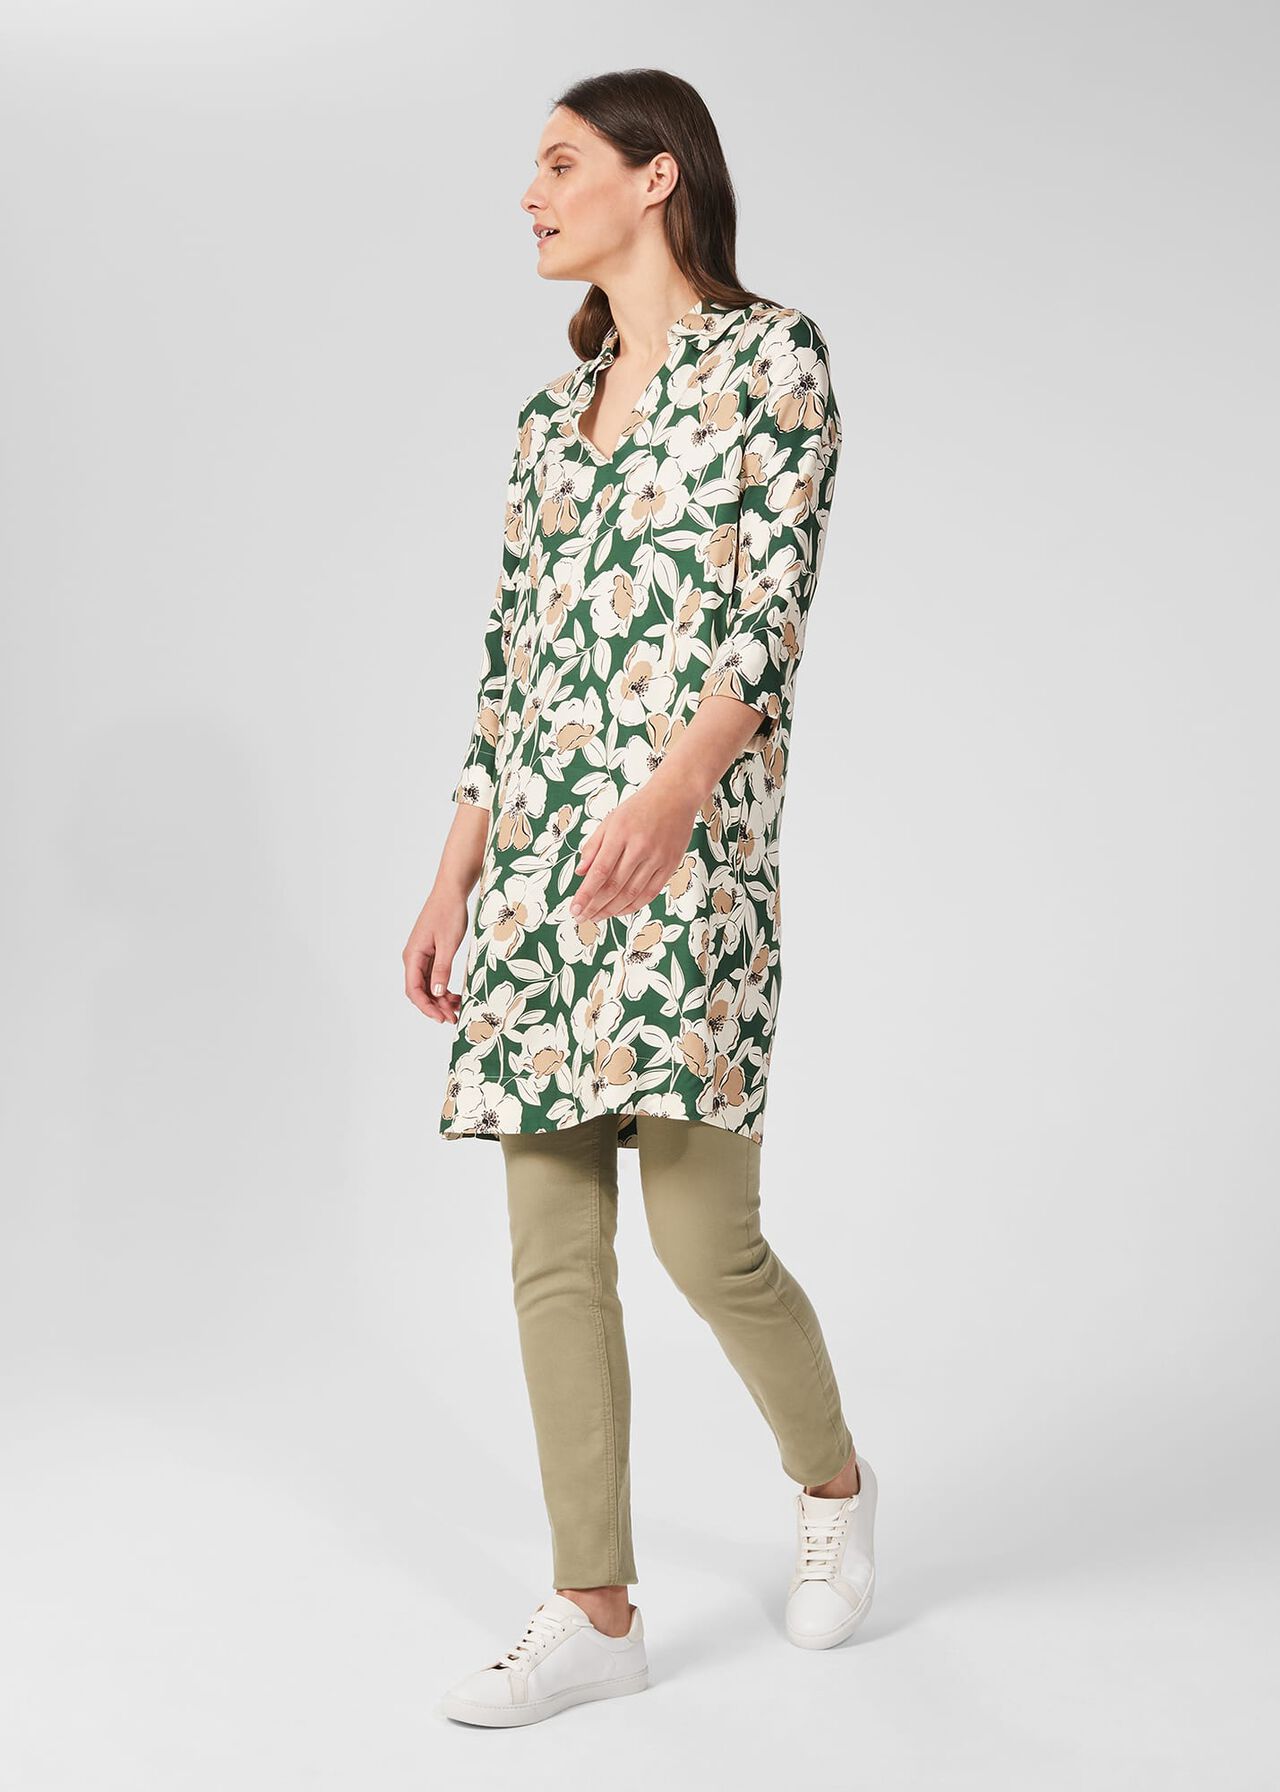 Marea Floral Tunic Dress, Green Multi, hi-res